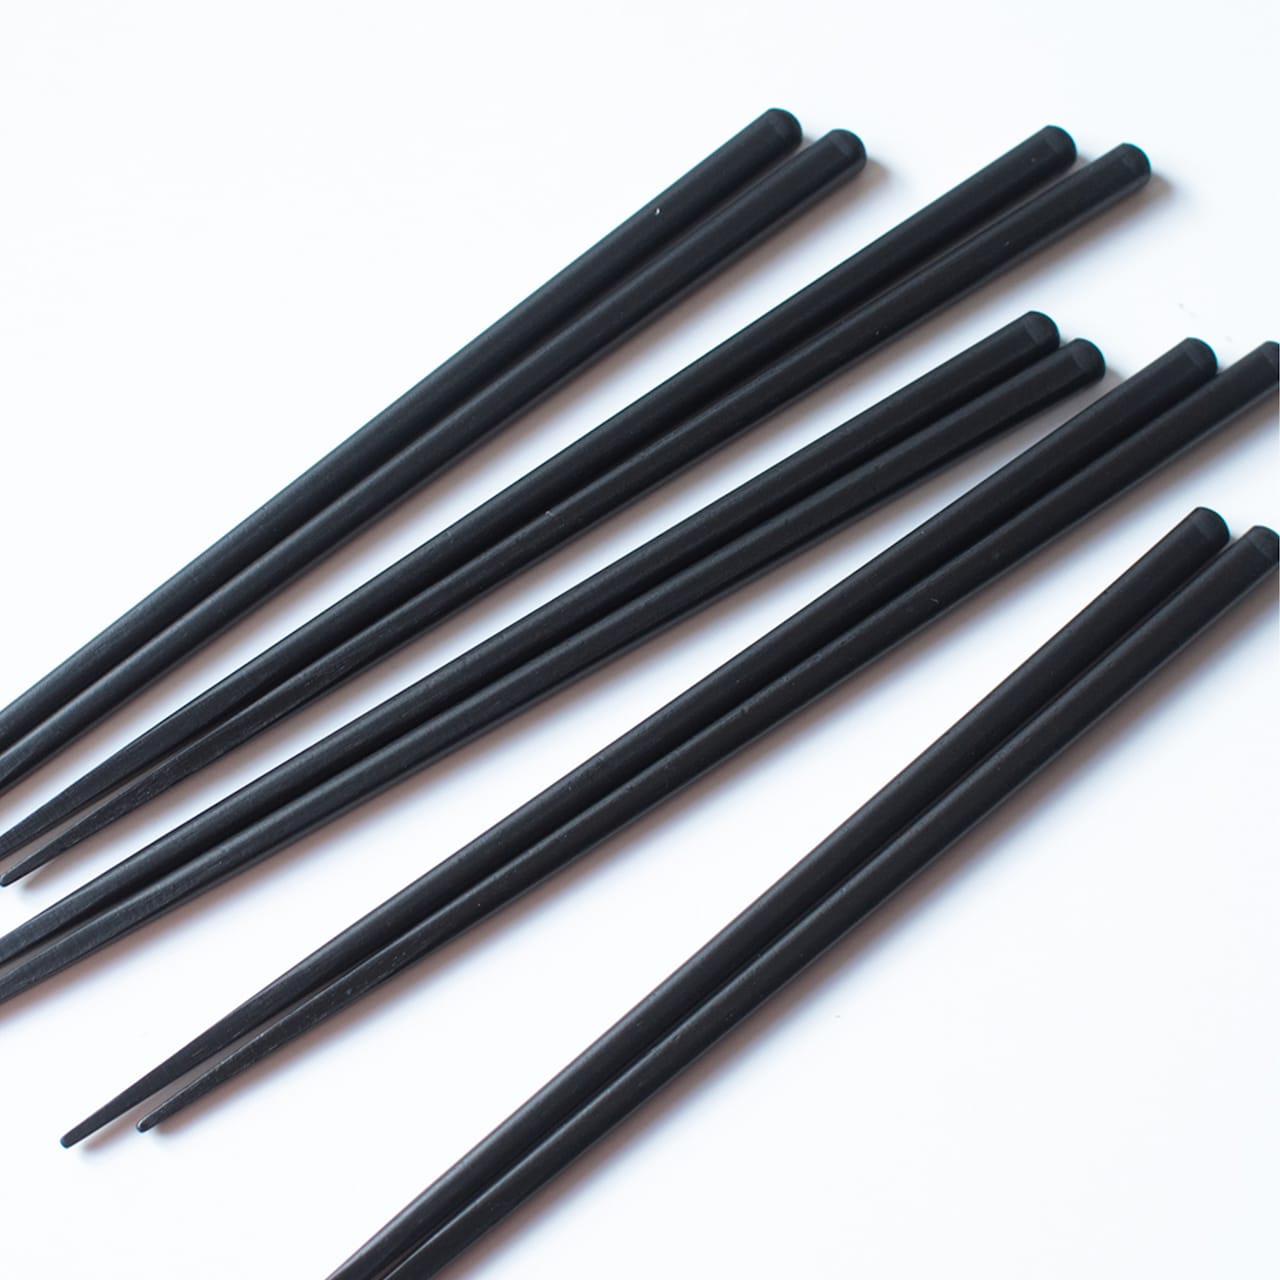 Kawai Octagon Chopsticks - Set of 5